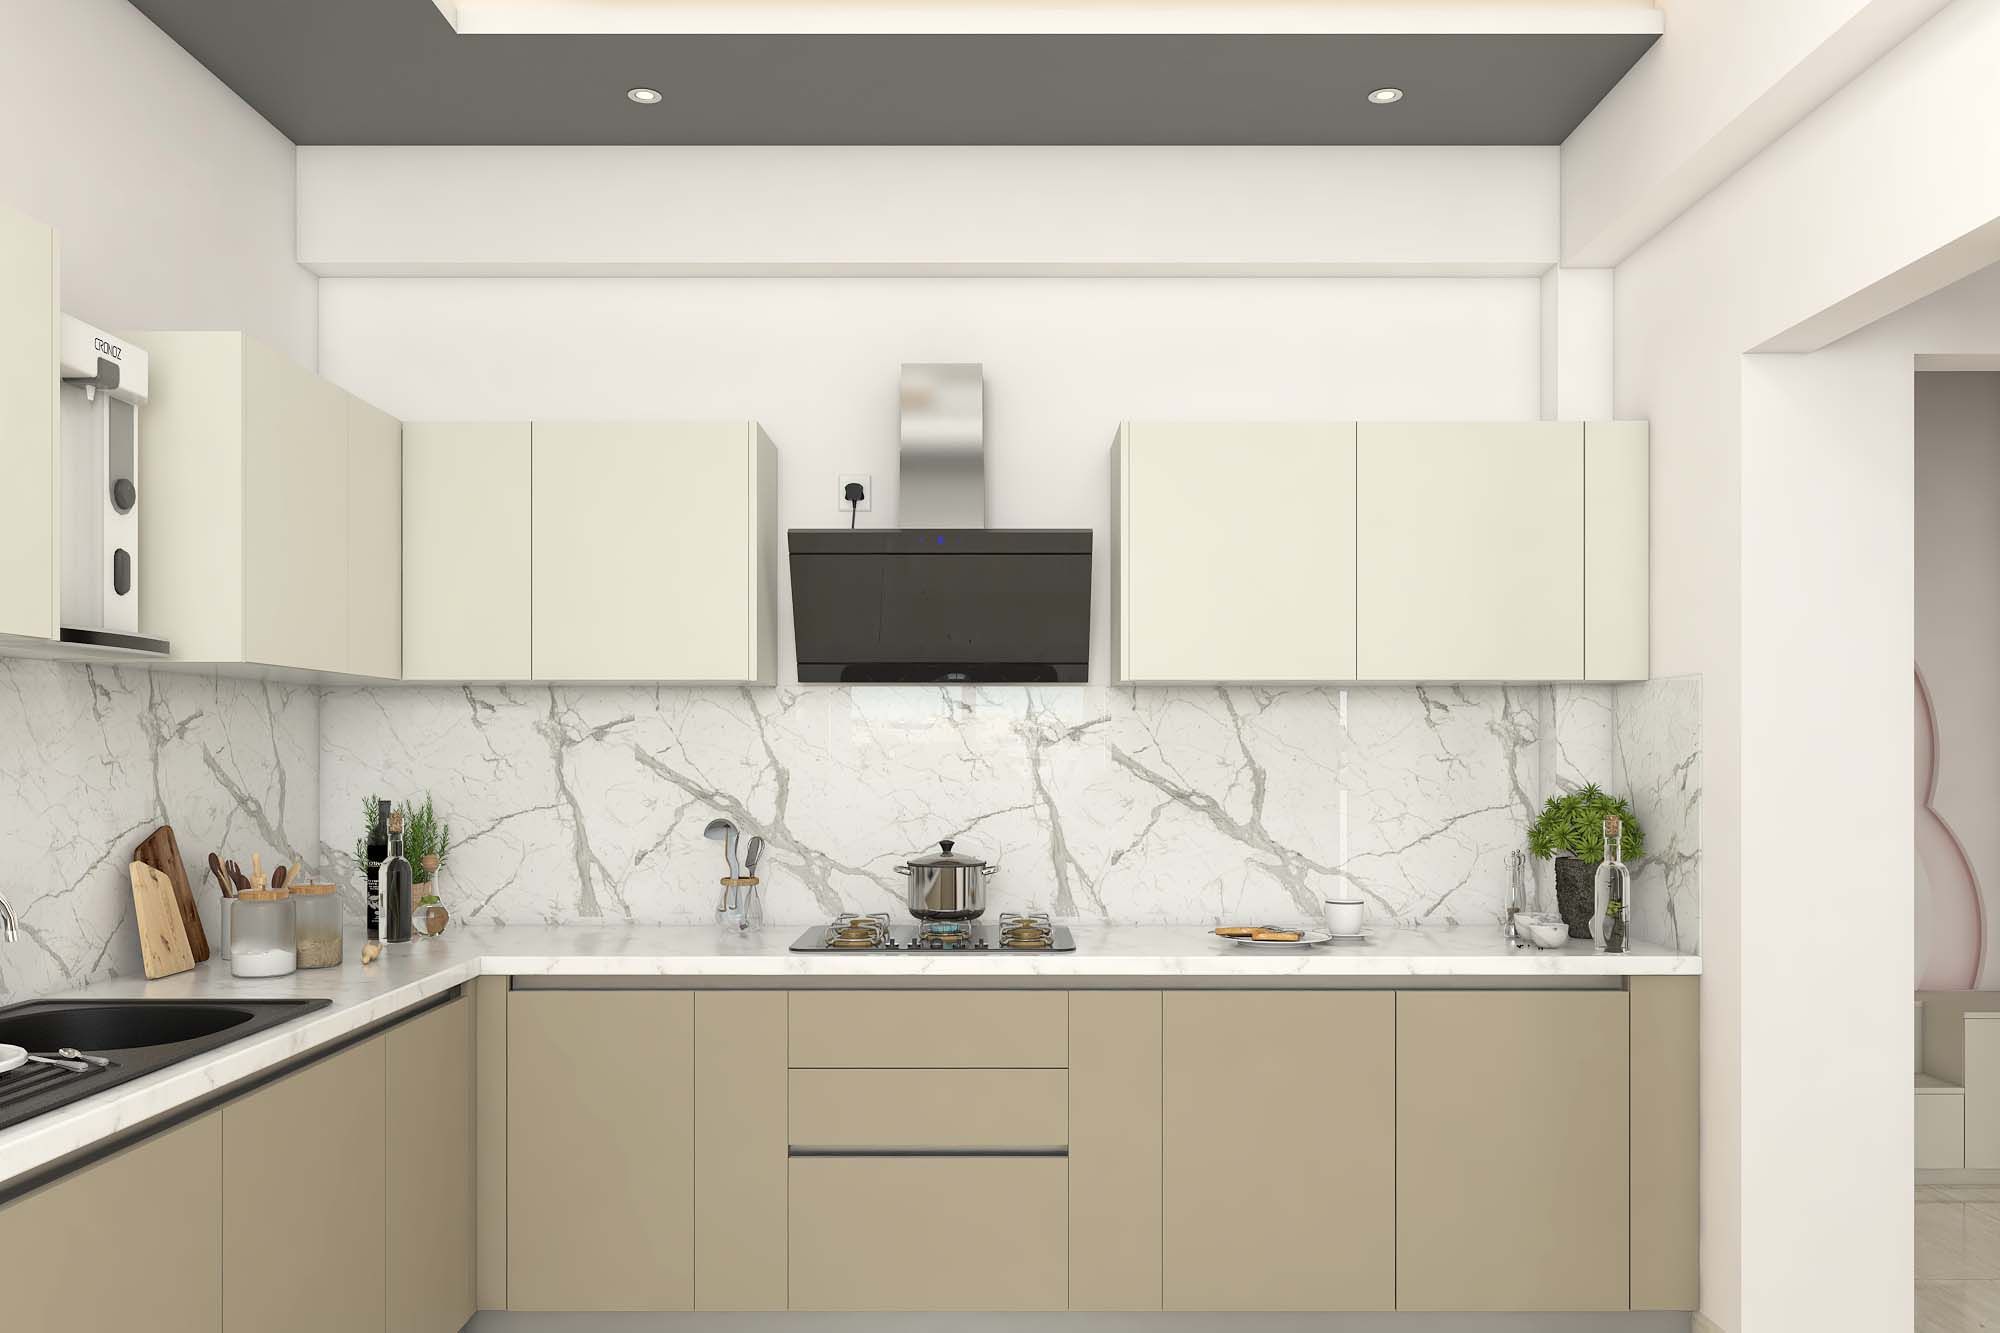 Contemporary U-Shaped Modular Kitchen Design In Beige And White